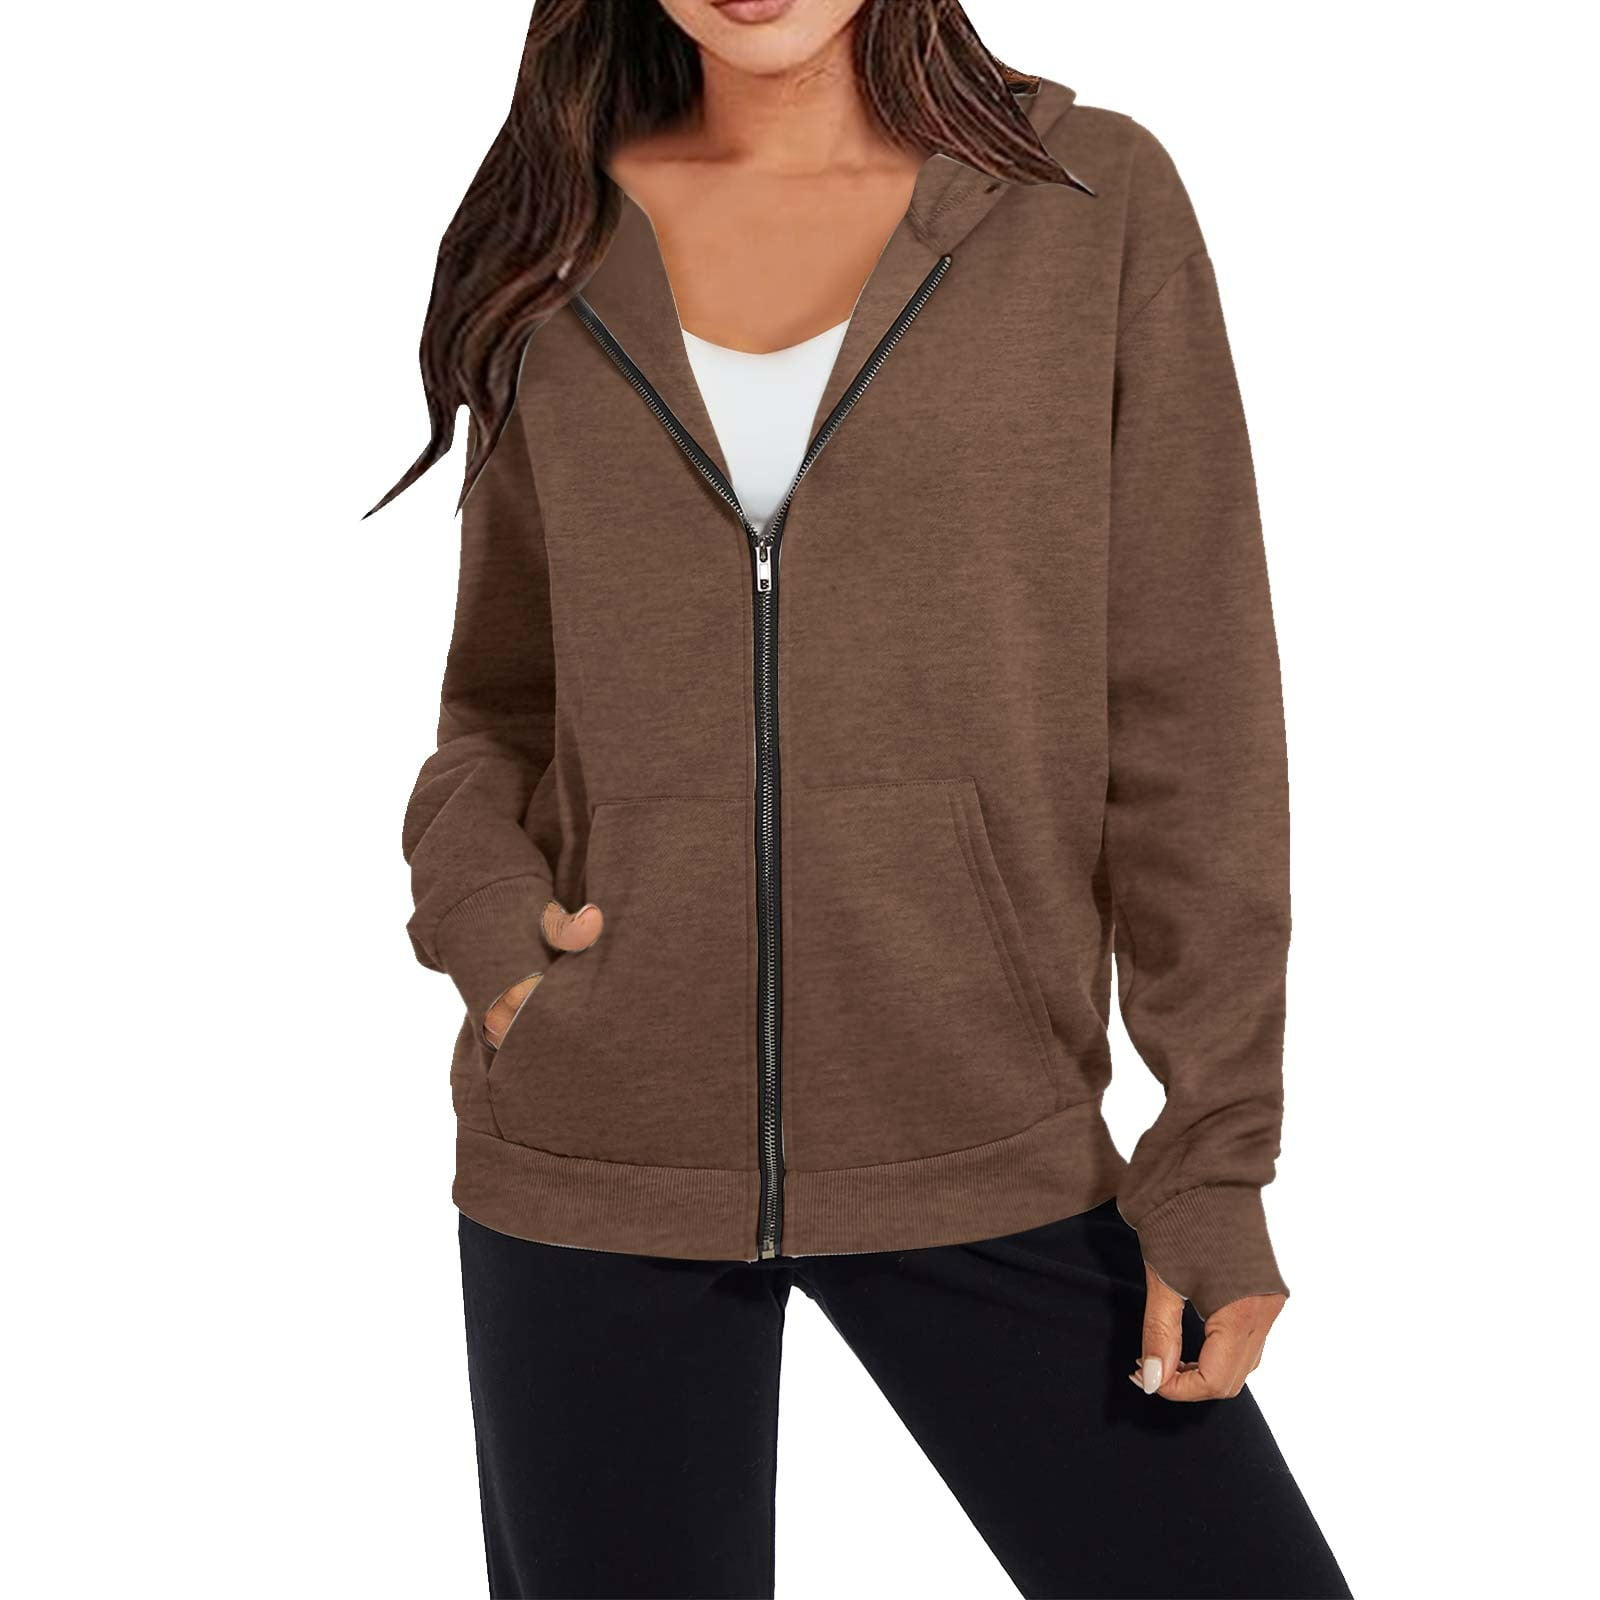 Zipper Hoodie and Sweatshirt Womens Long Sleeve Thumb Holes Full Zip-up  Jackets with Hood Pockets Plain Outwear (Medium, Black) 